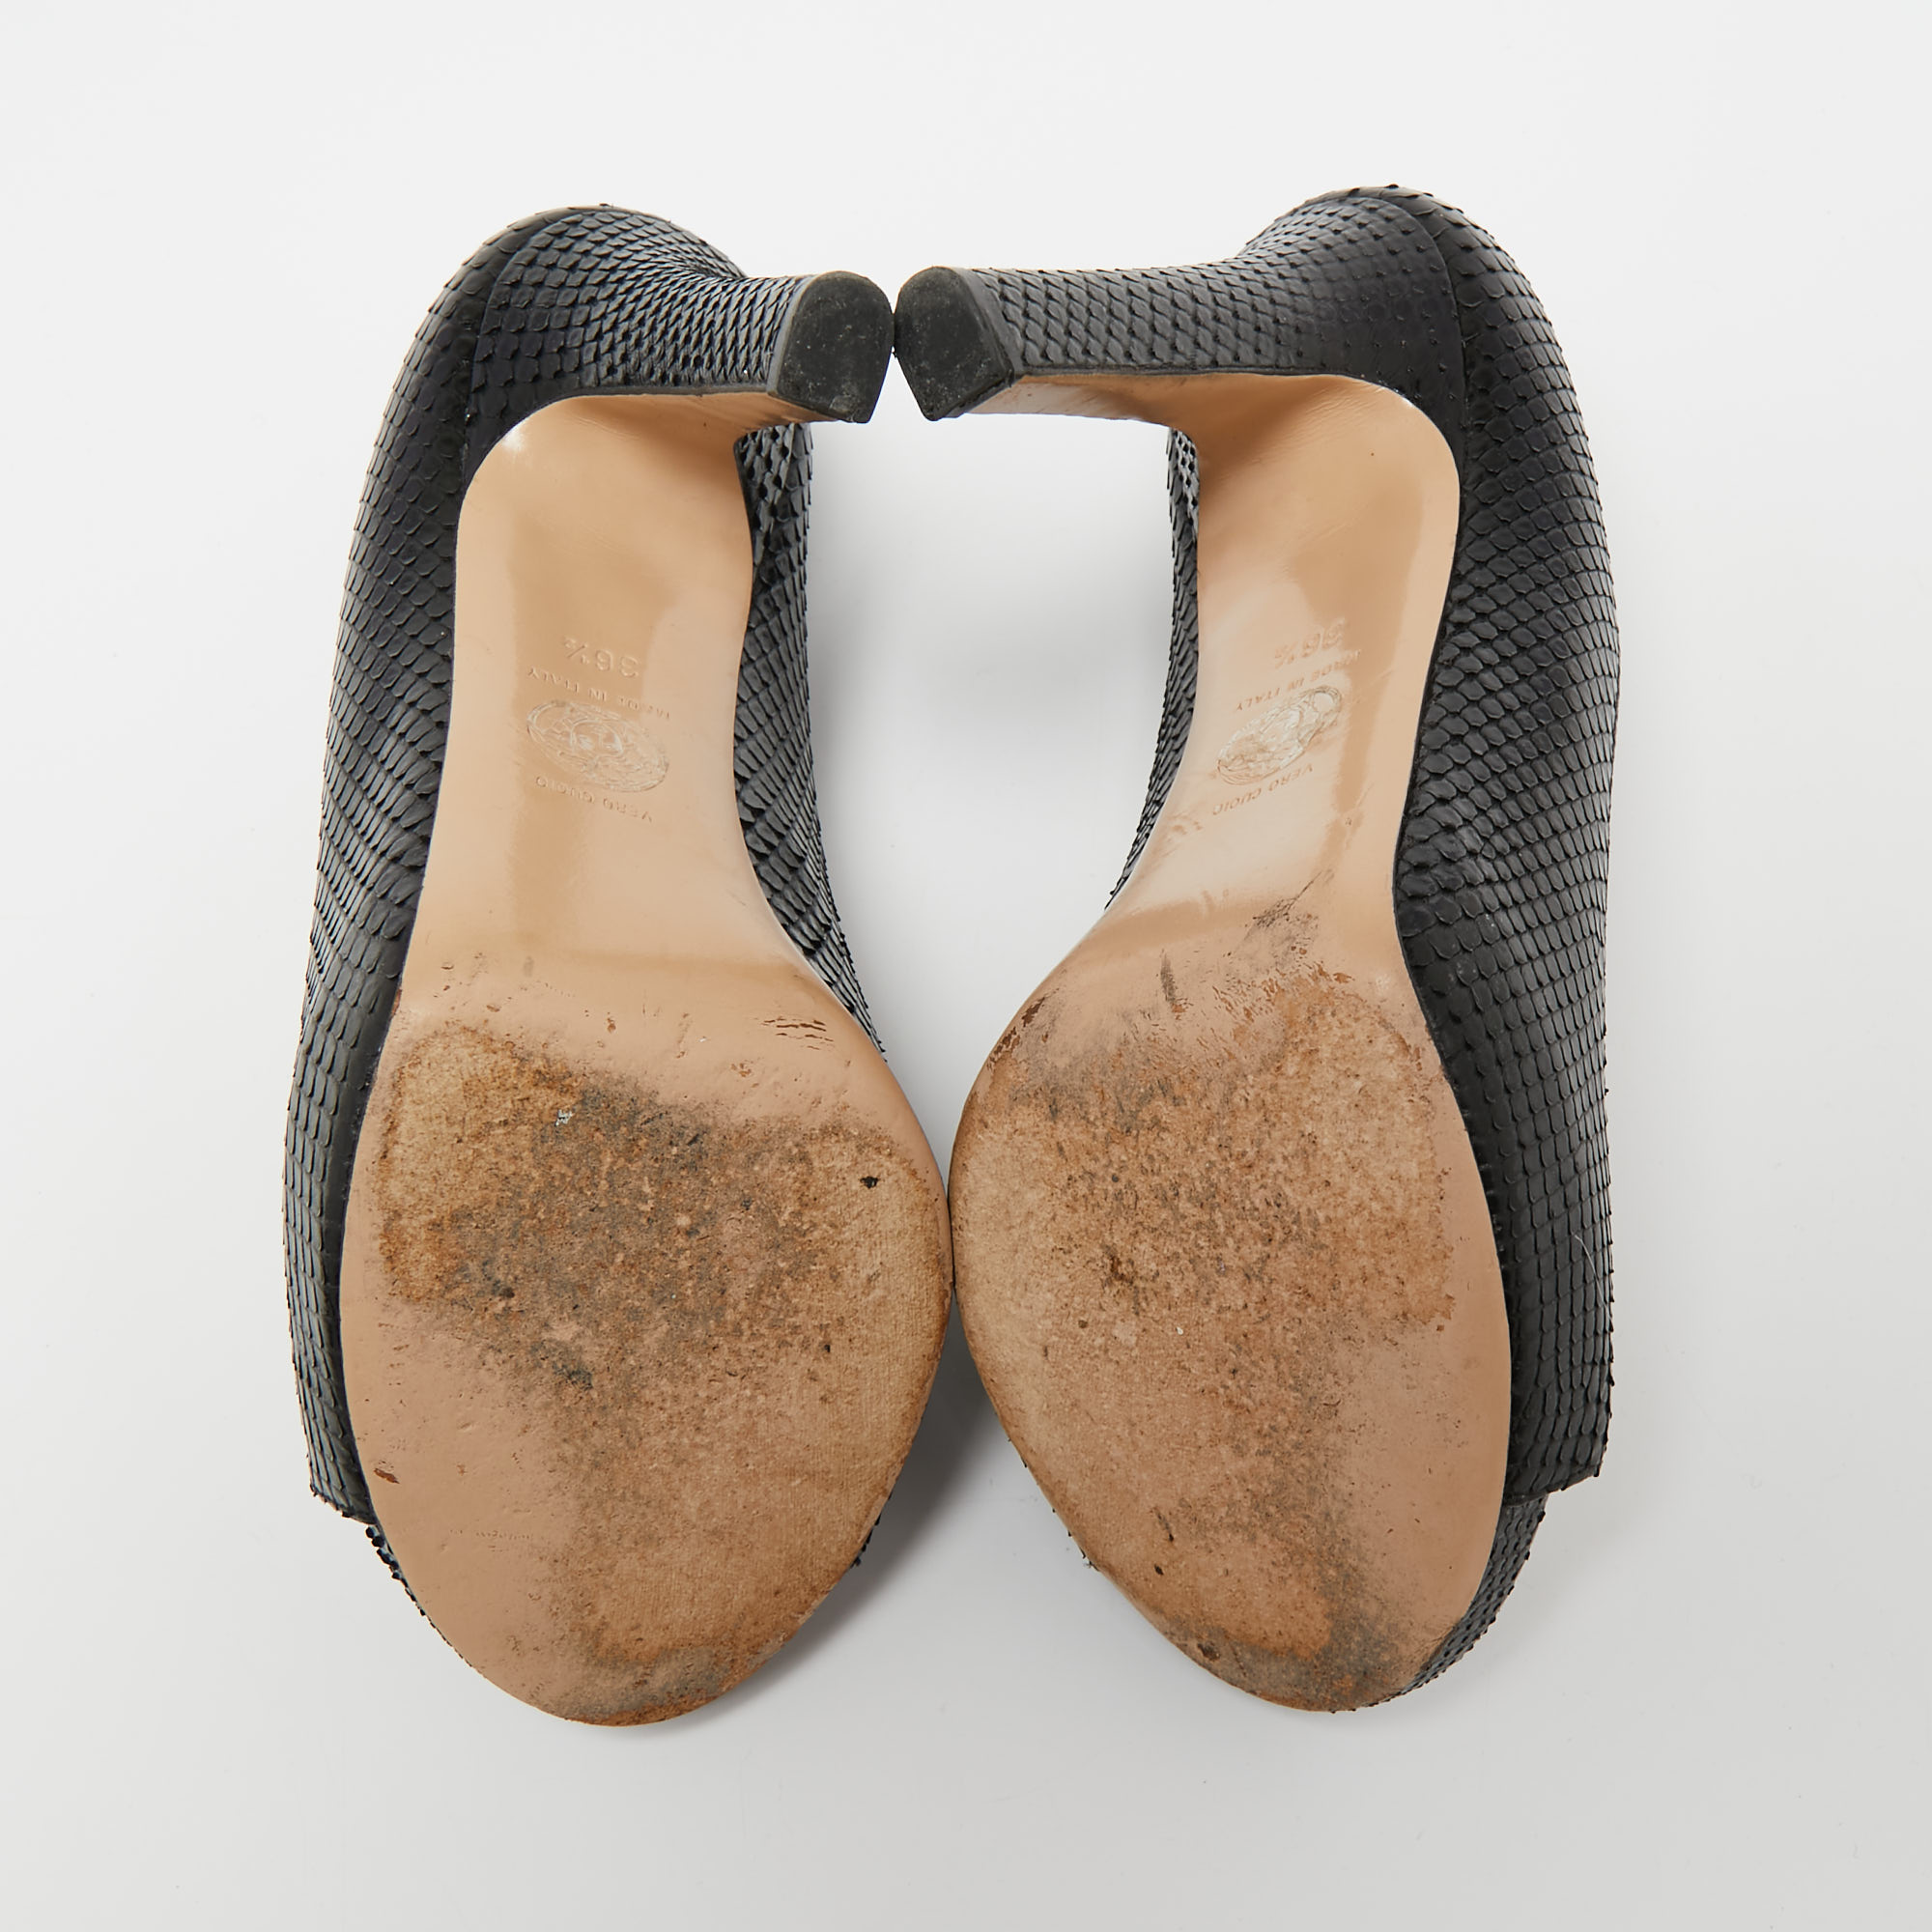 Versace Black Snakeskin Embossed Leather Open Toe Pumps Sze 36.5